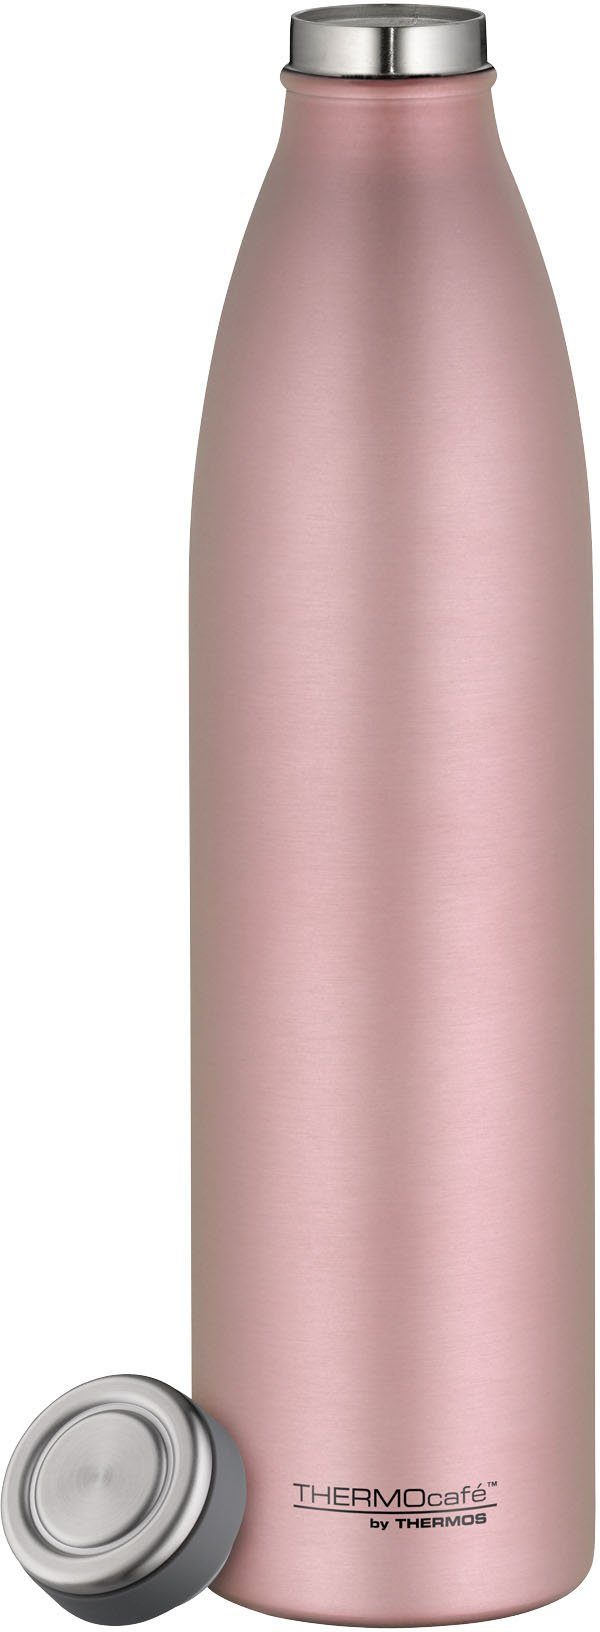 THERMOS Thermoflasche ThermoCaféTC rosa schlankes Design Bottle, Edelstahl,